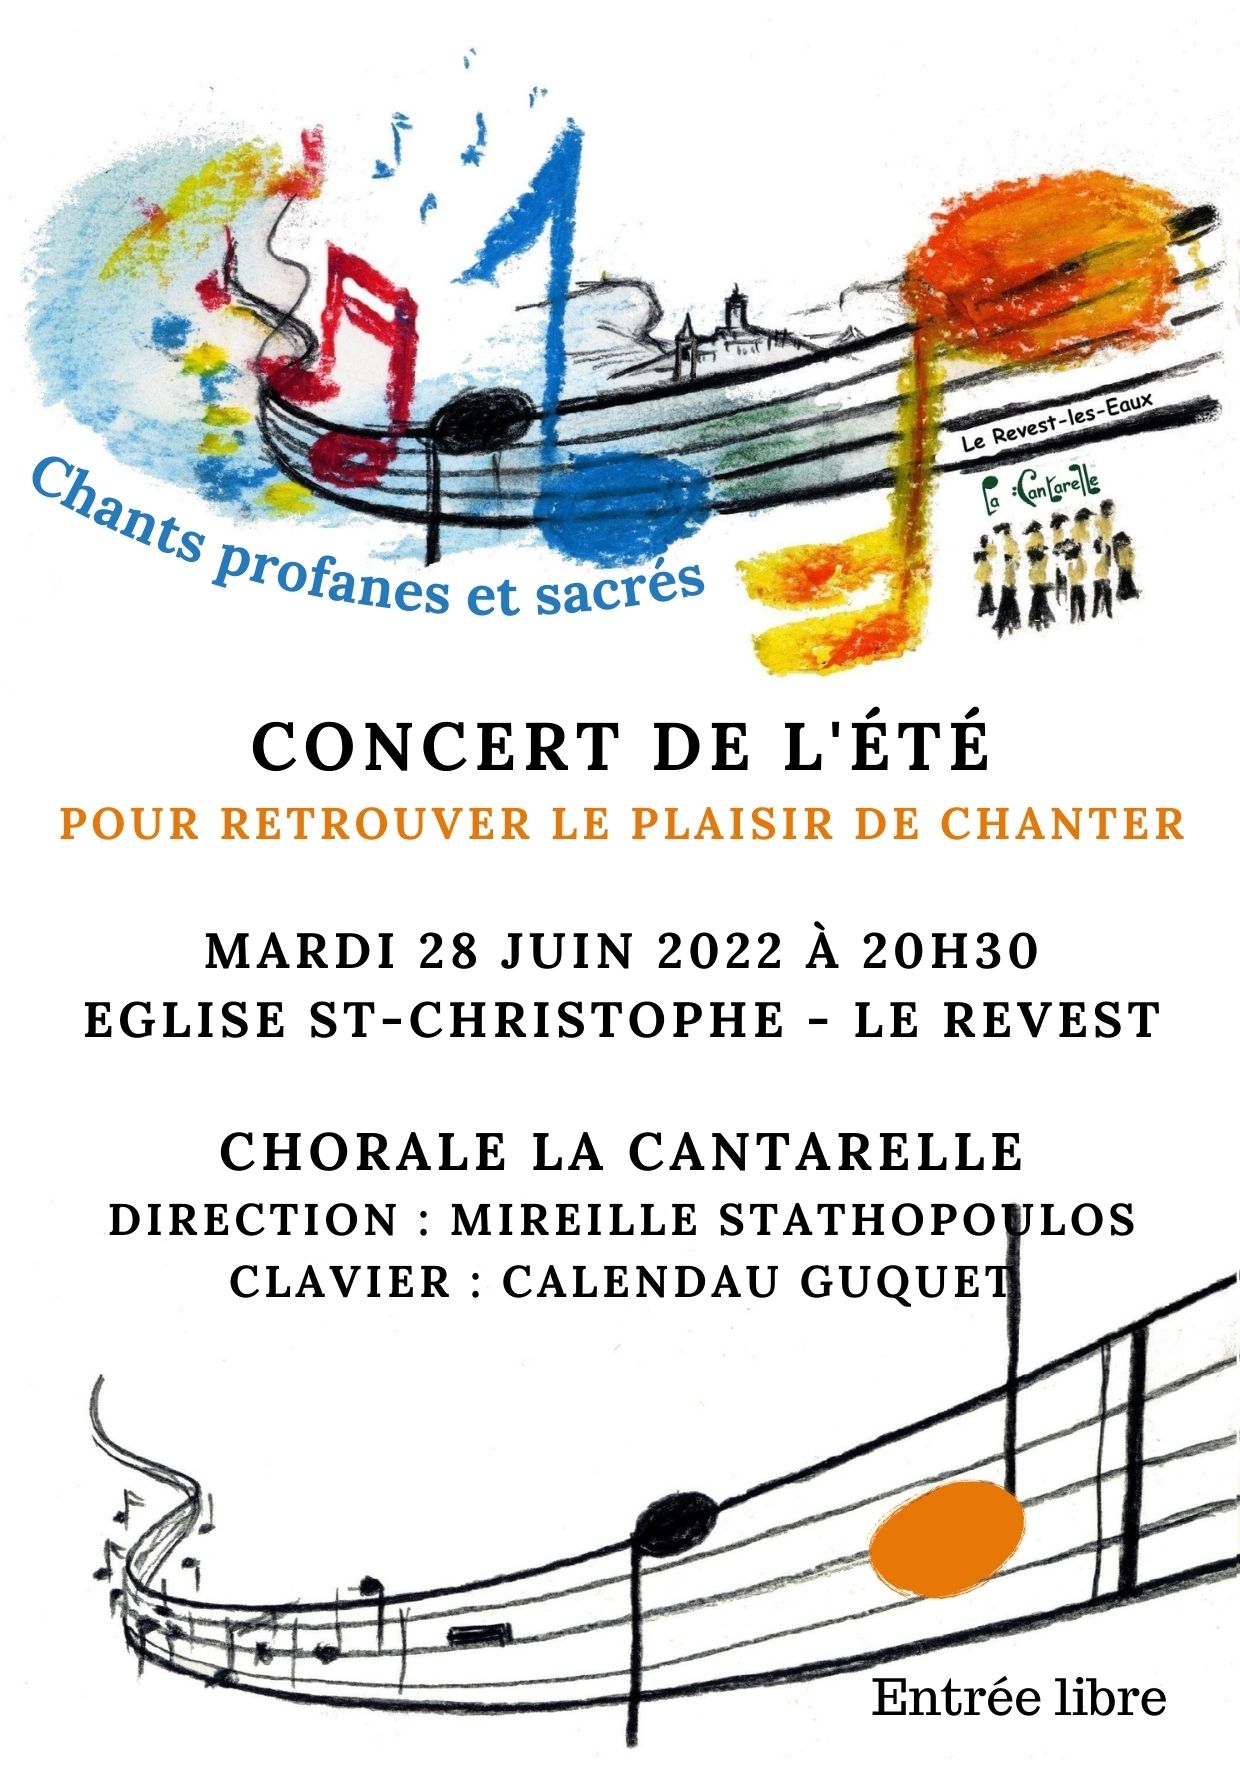 Concert La Cantarelle 28 juin 2022